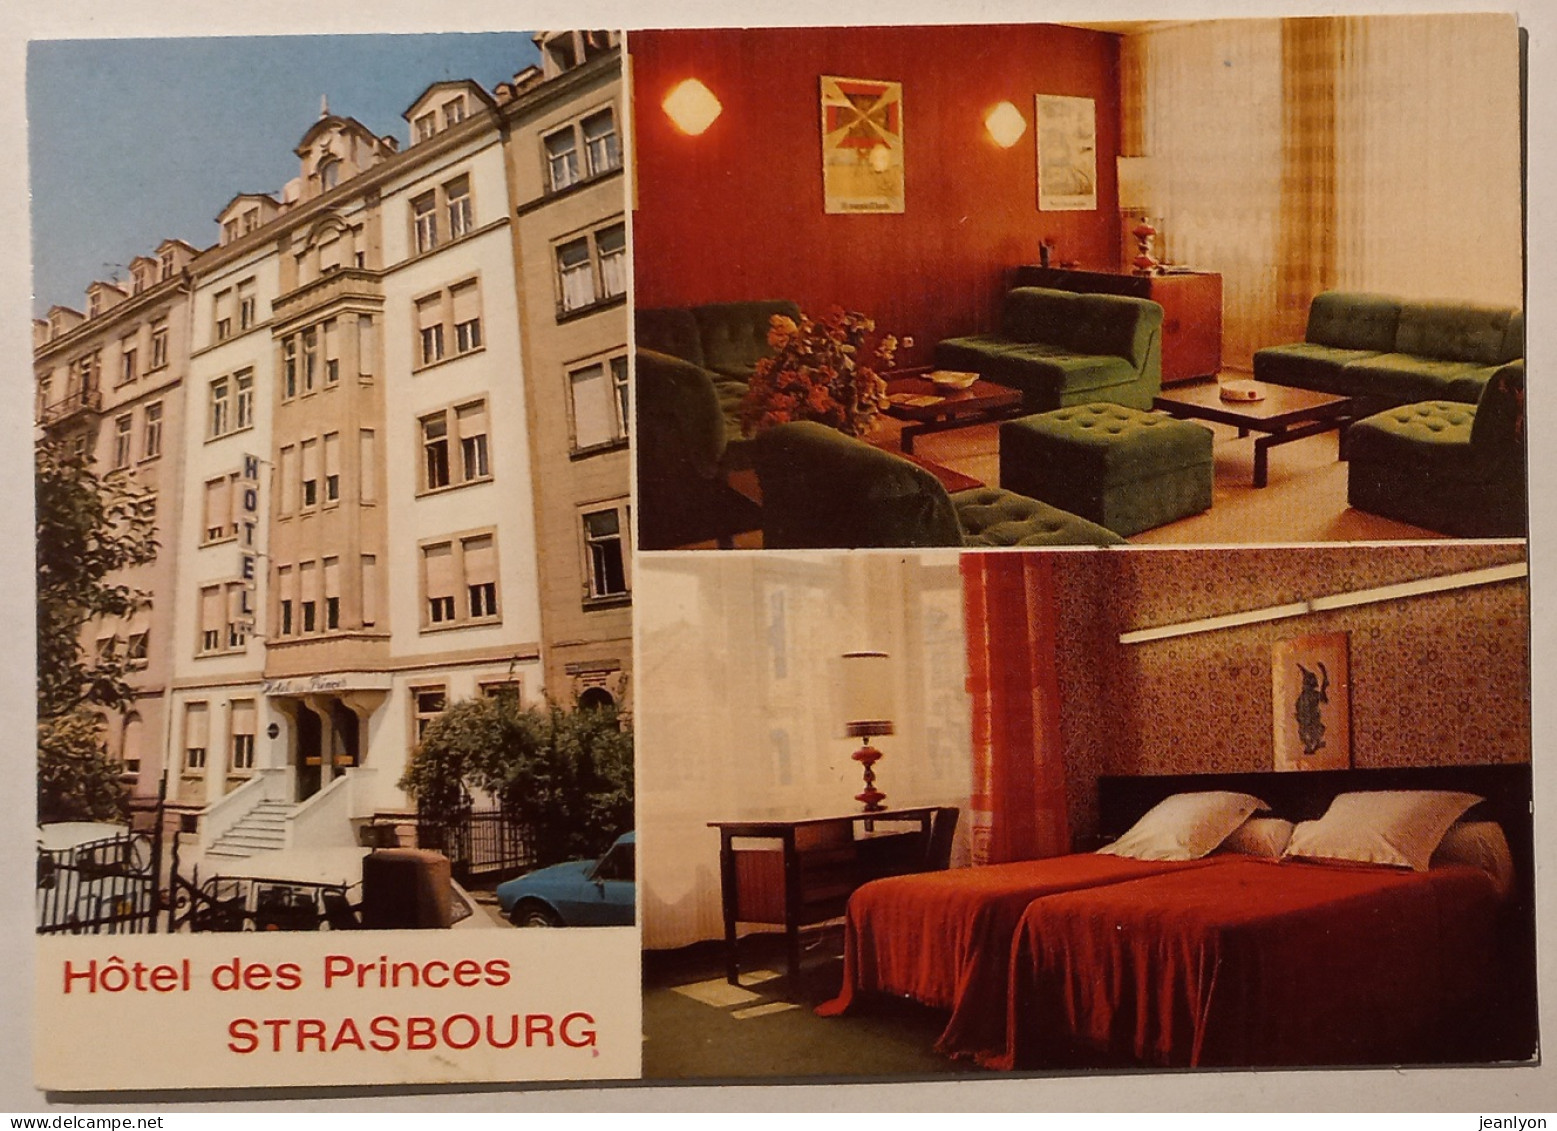 STRASBOURG (67 Bas Rhin) - Hotel Des Princes - 33 Rue Geiler - Salon / Chambre - Strasbourg